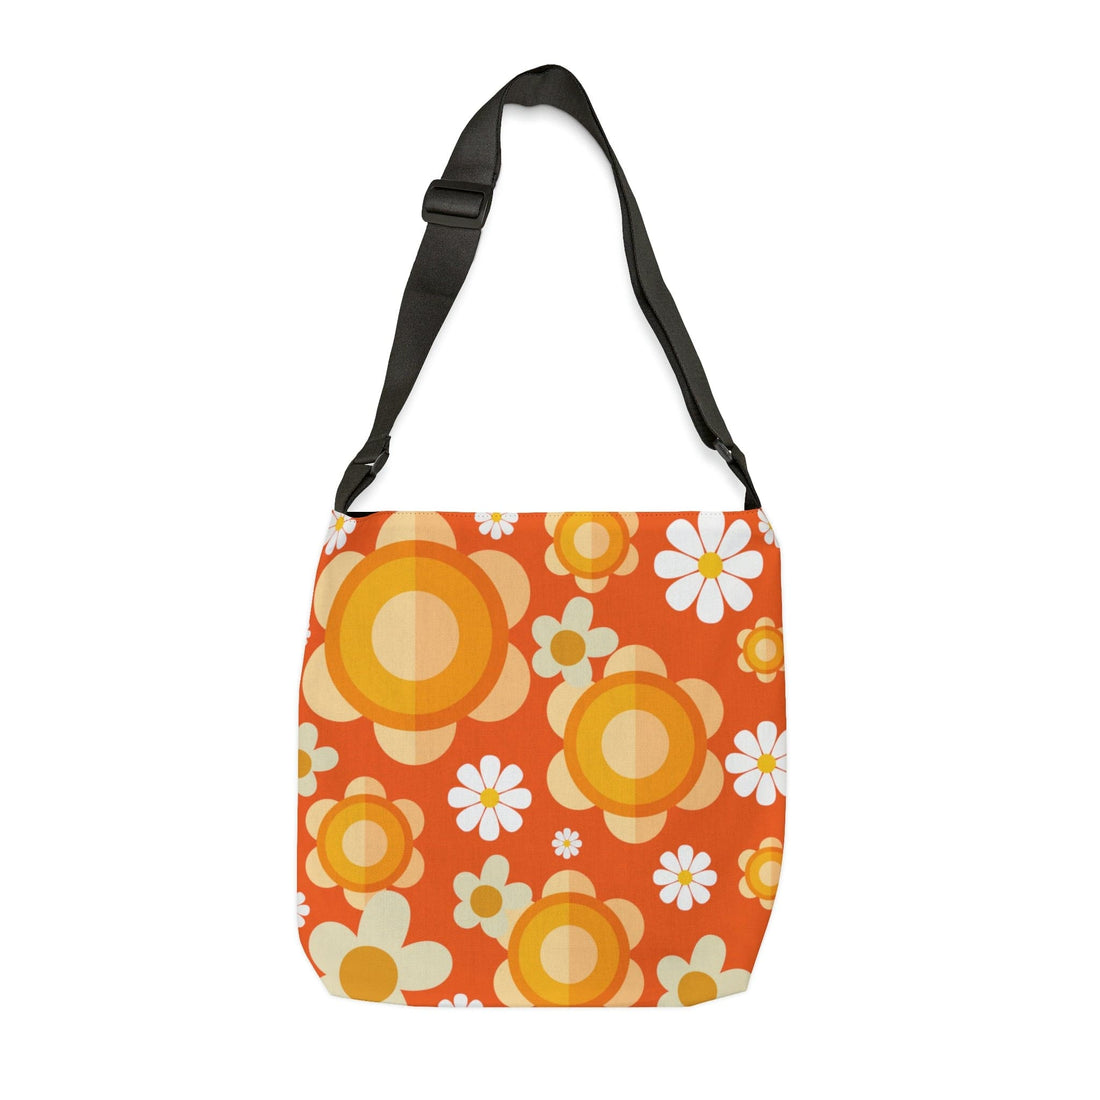 Flower Power Groovy Orange, Mod Daisy, Yellow Flowers Hip Retro Adjustable Tote Bag Bags